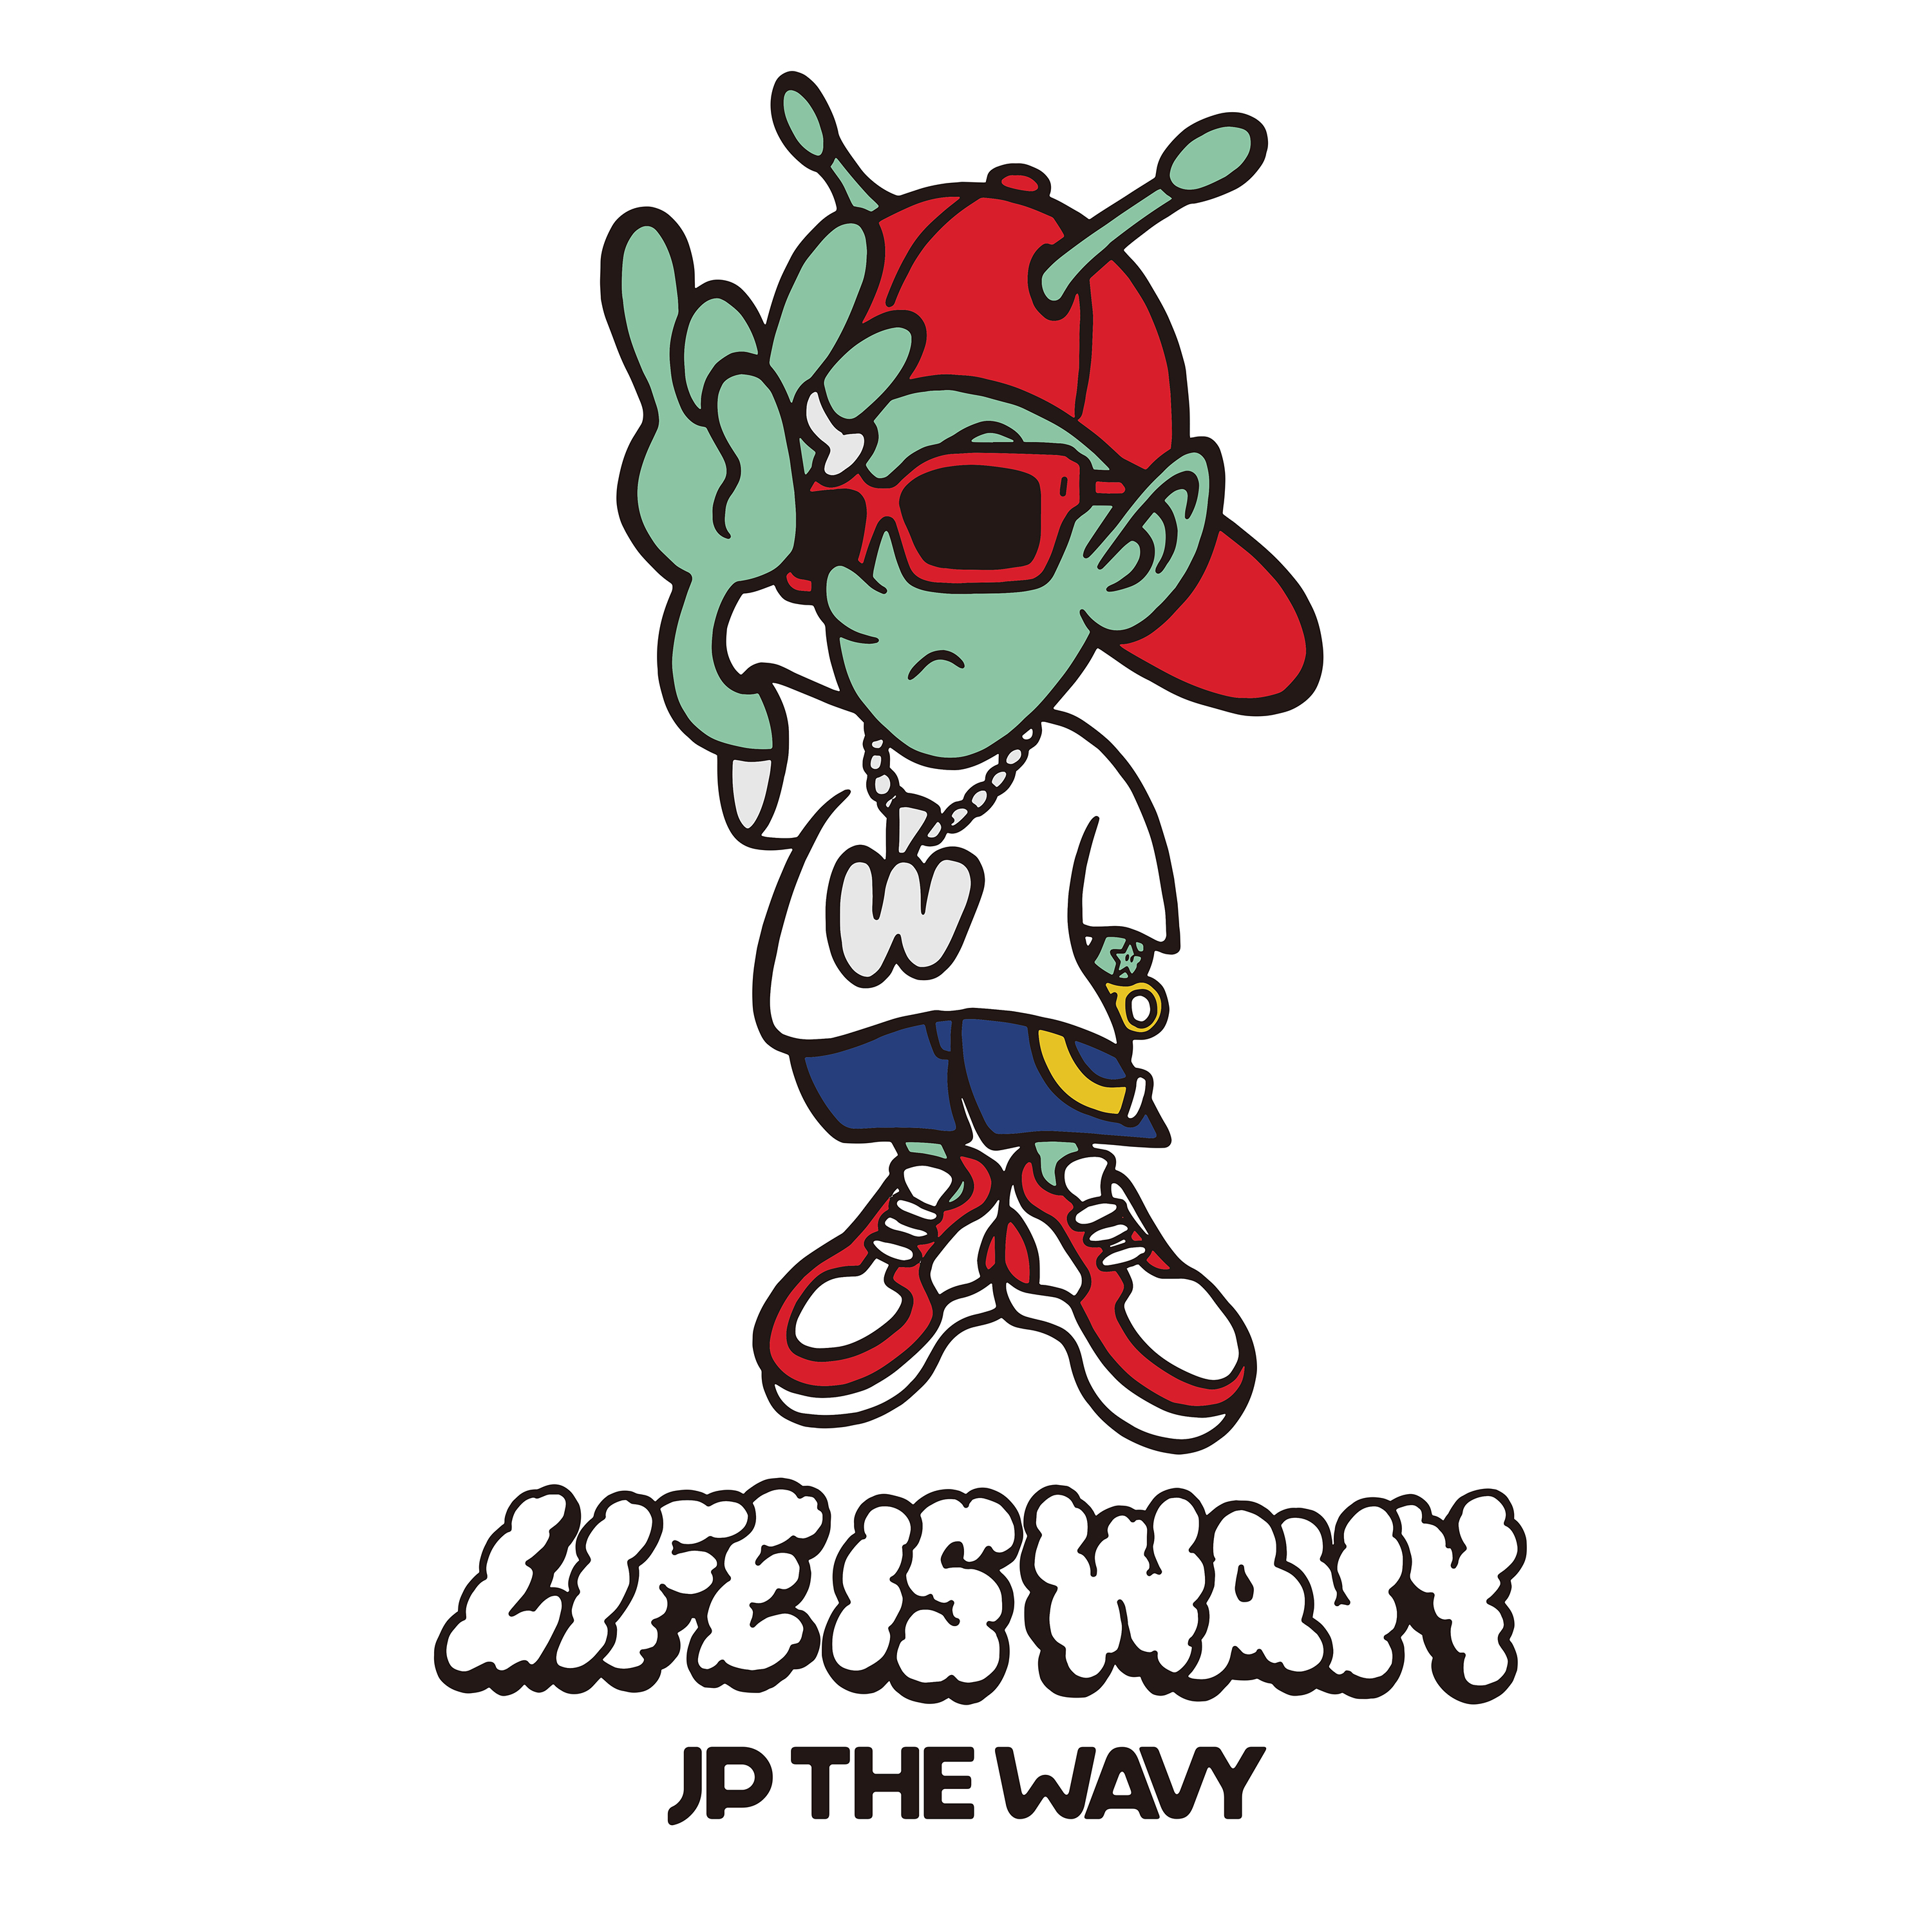 Just A Lil Bit歌词 歌手JP THE WAVY / Sik-K-专辑LIFE IS WAVY-单曲《Just A Lil Bit》LRC歌词下载